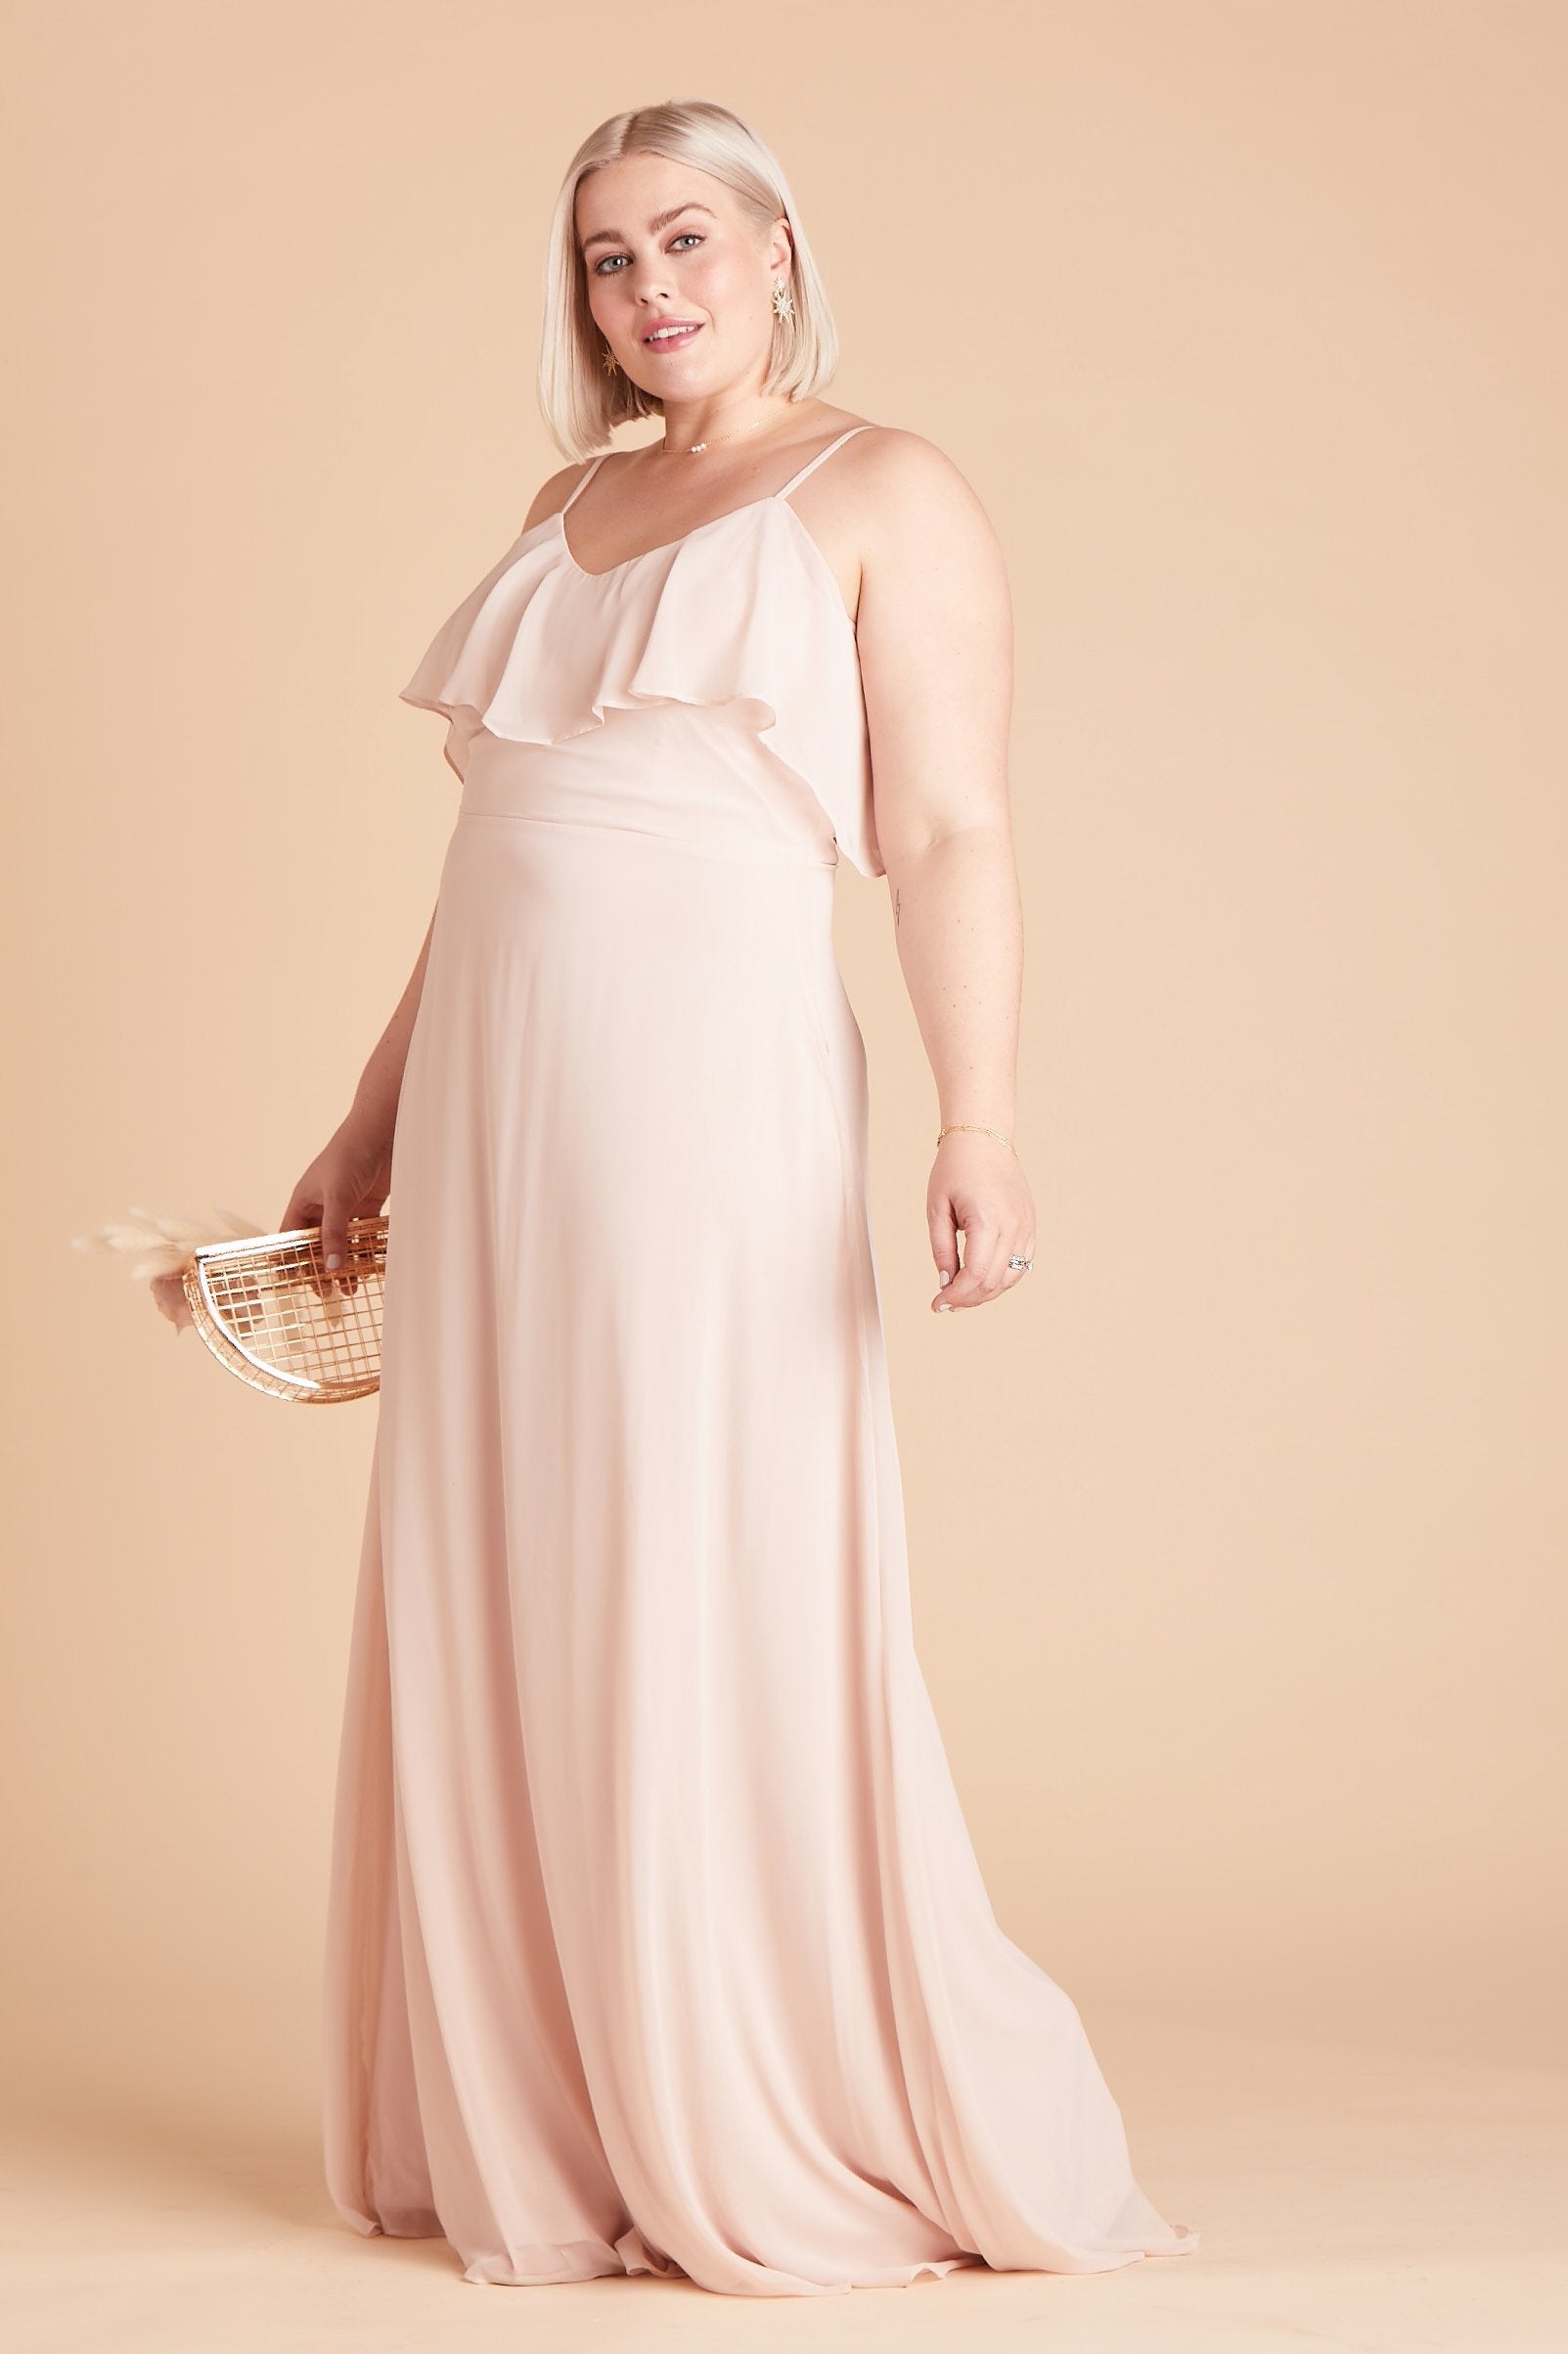 Jane convertible plus size bridesmaid dress in pale blush chiffon by Birdy Grey, side view